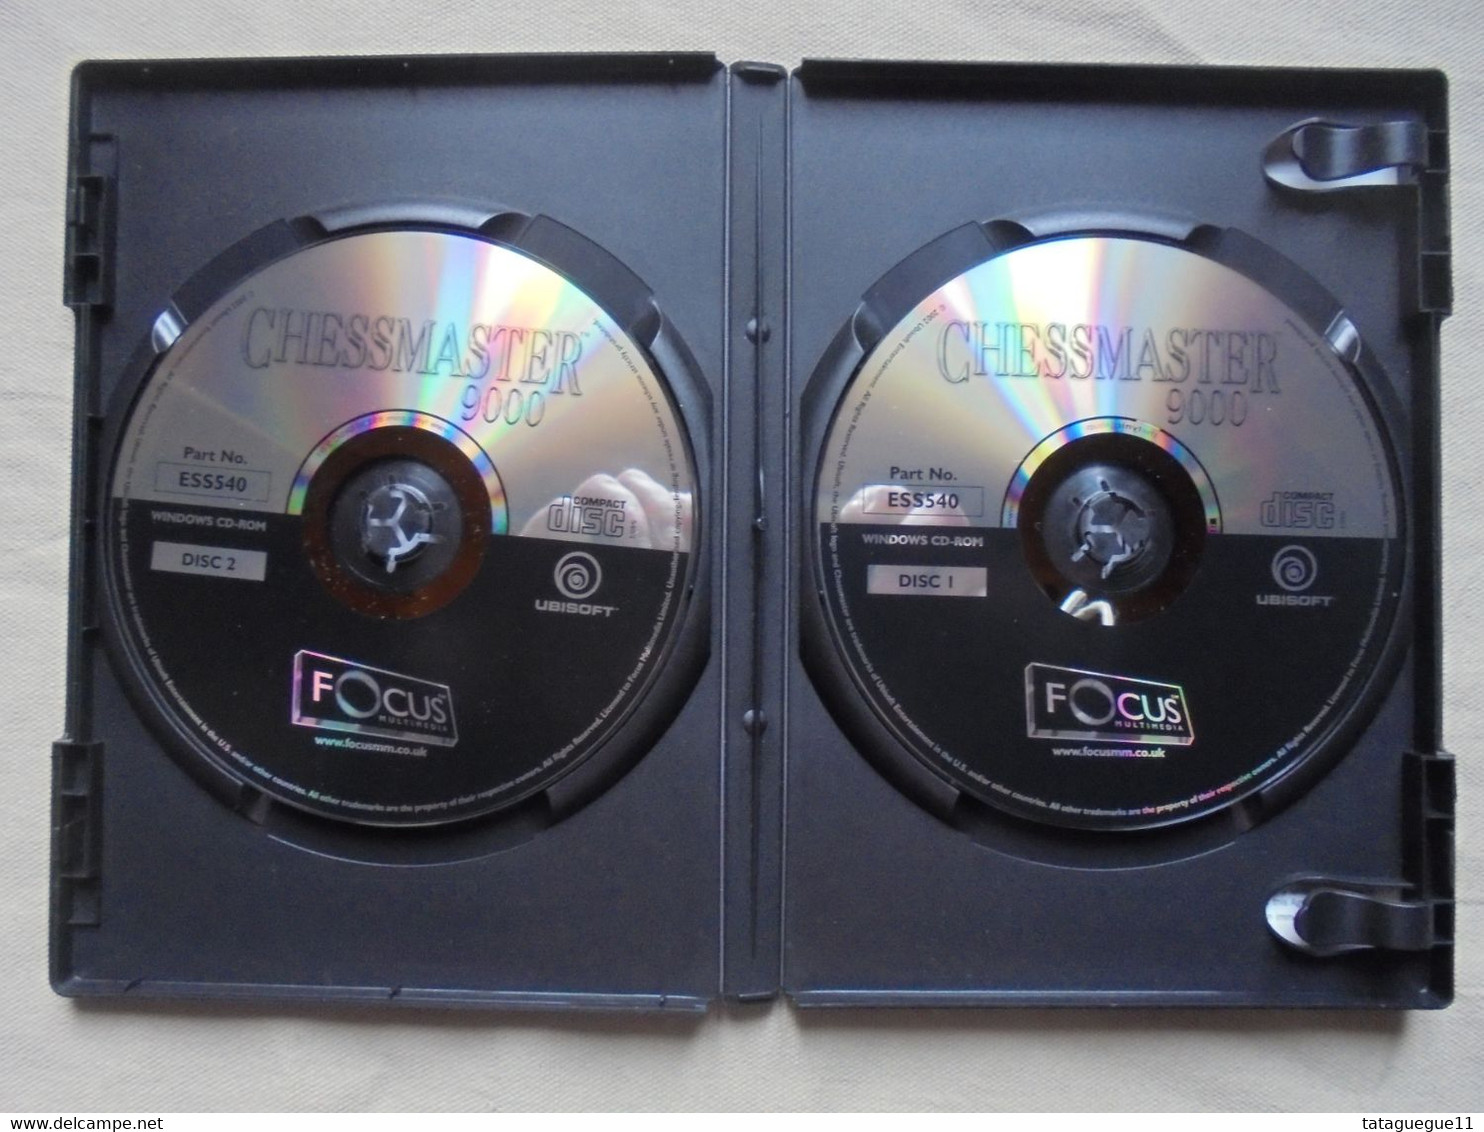 Vintage - Jeu PC CD Rom - Chessmaster 9000 - 2006 - PC-Spiele